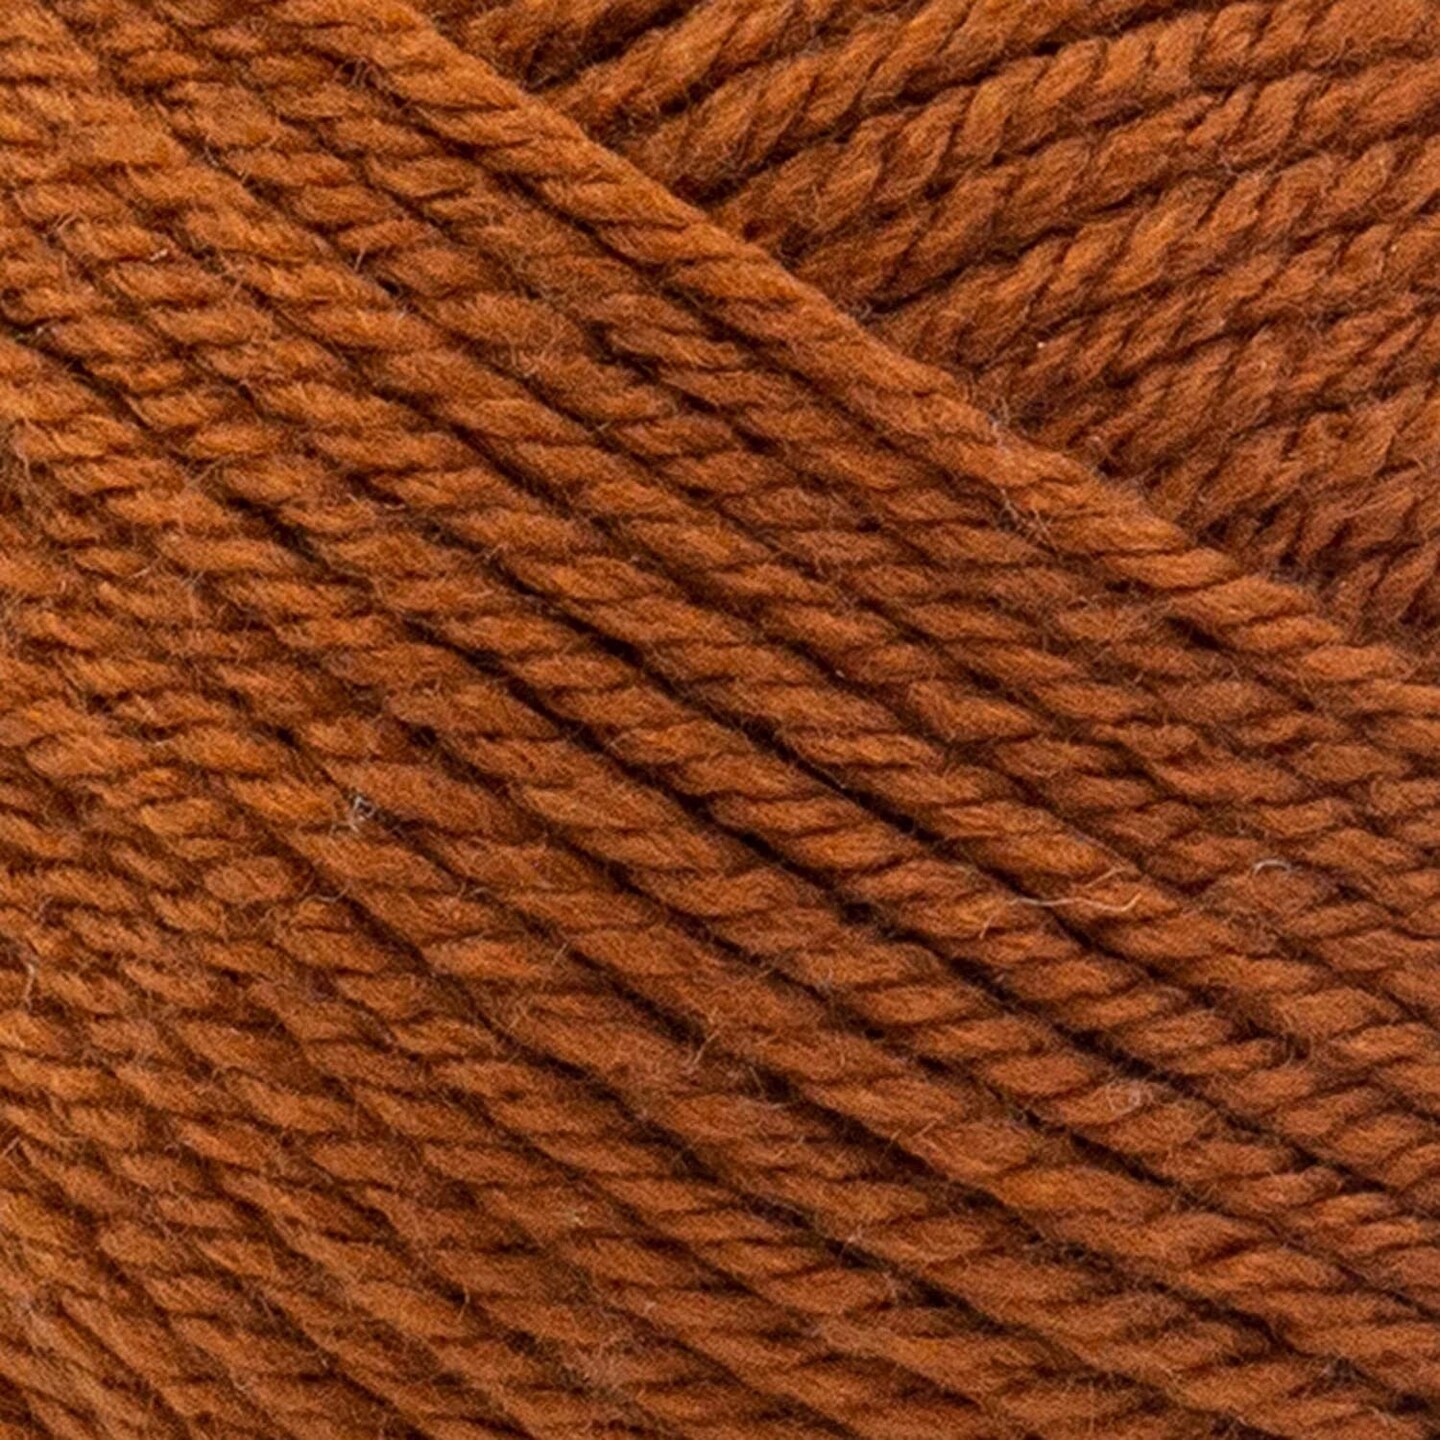 Lion Brand Yarn Basic Stitch Anti-pilling Knitting Yarn, Yarn for Crocheting, 3-Pack, Clay